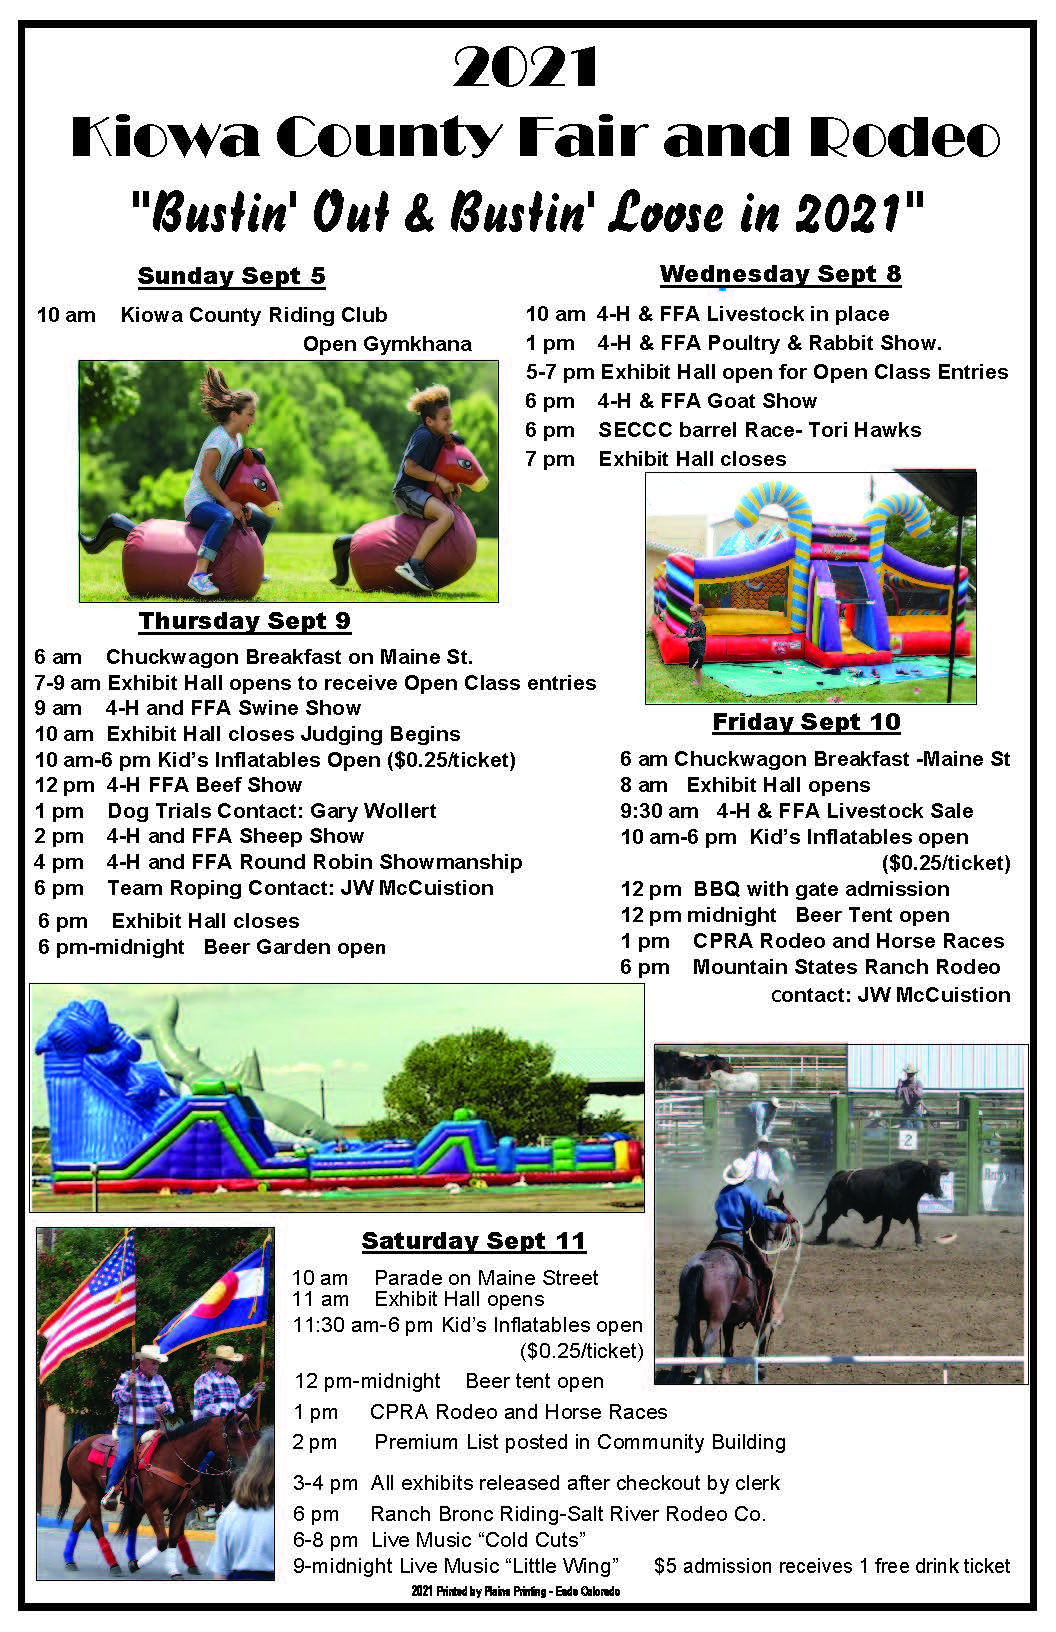 2021 Kiowa County Fair events schedule Kiowa County Press Eads